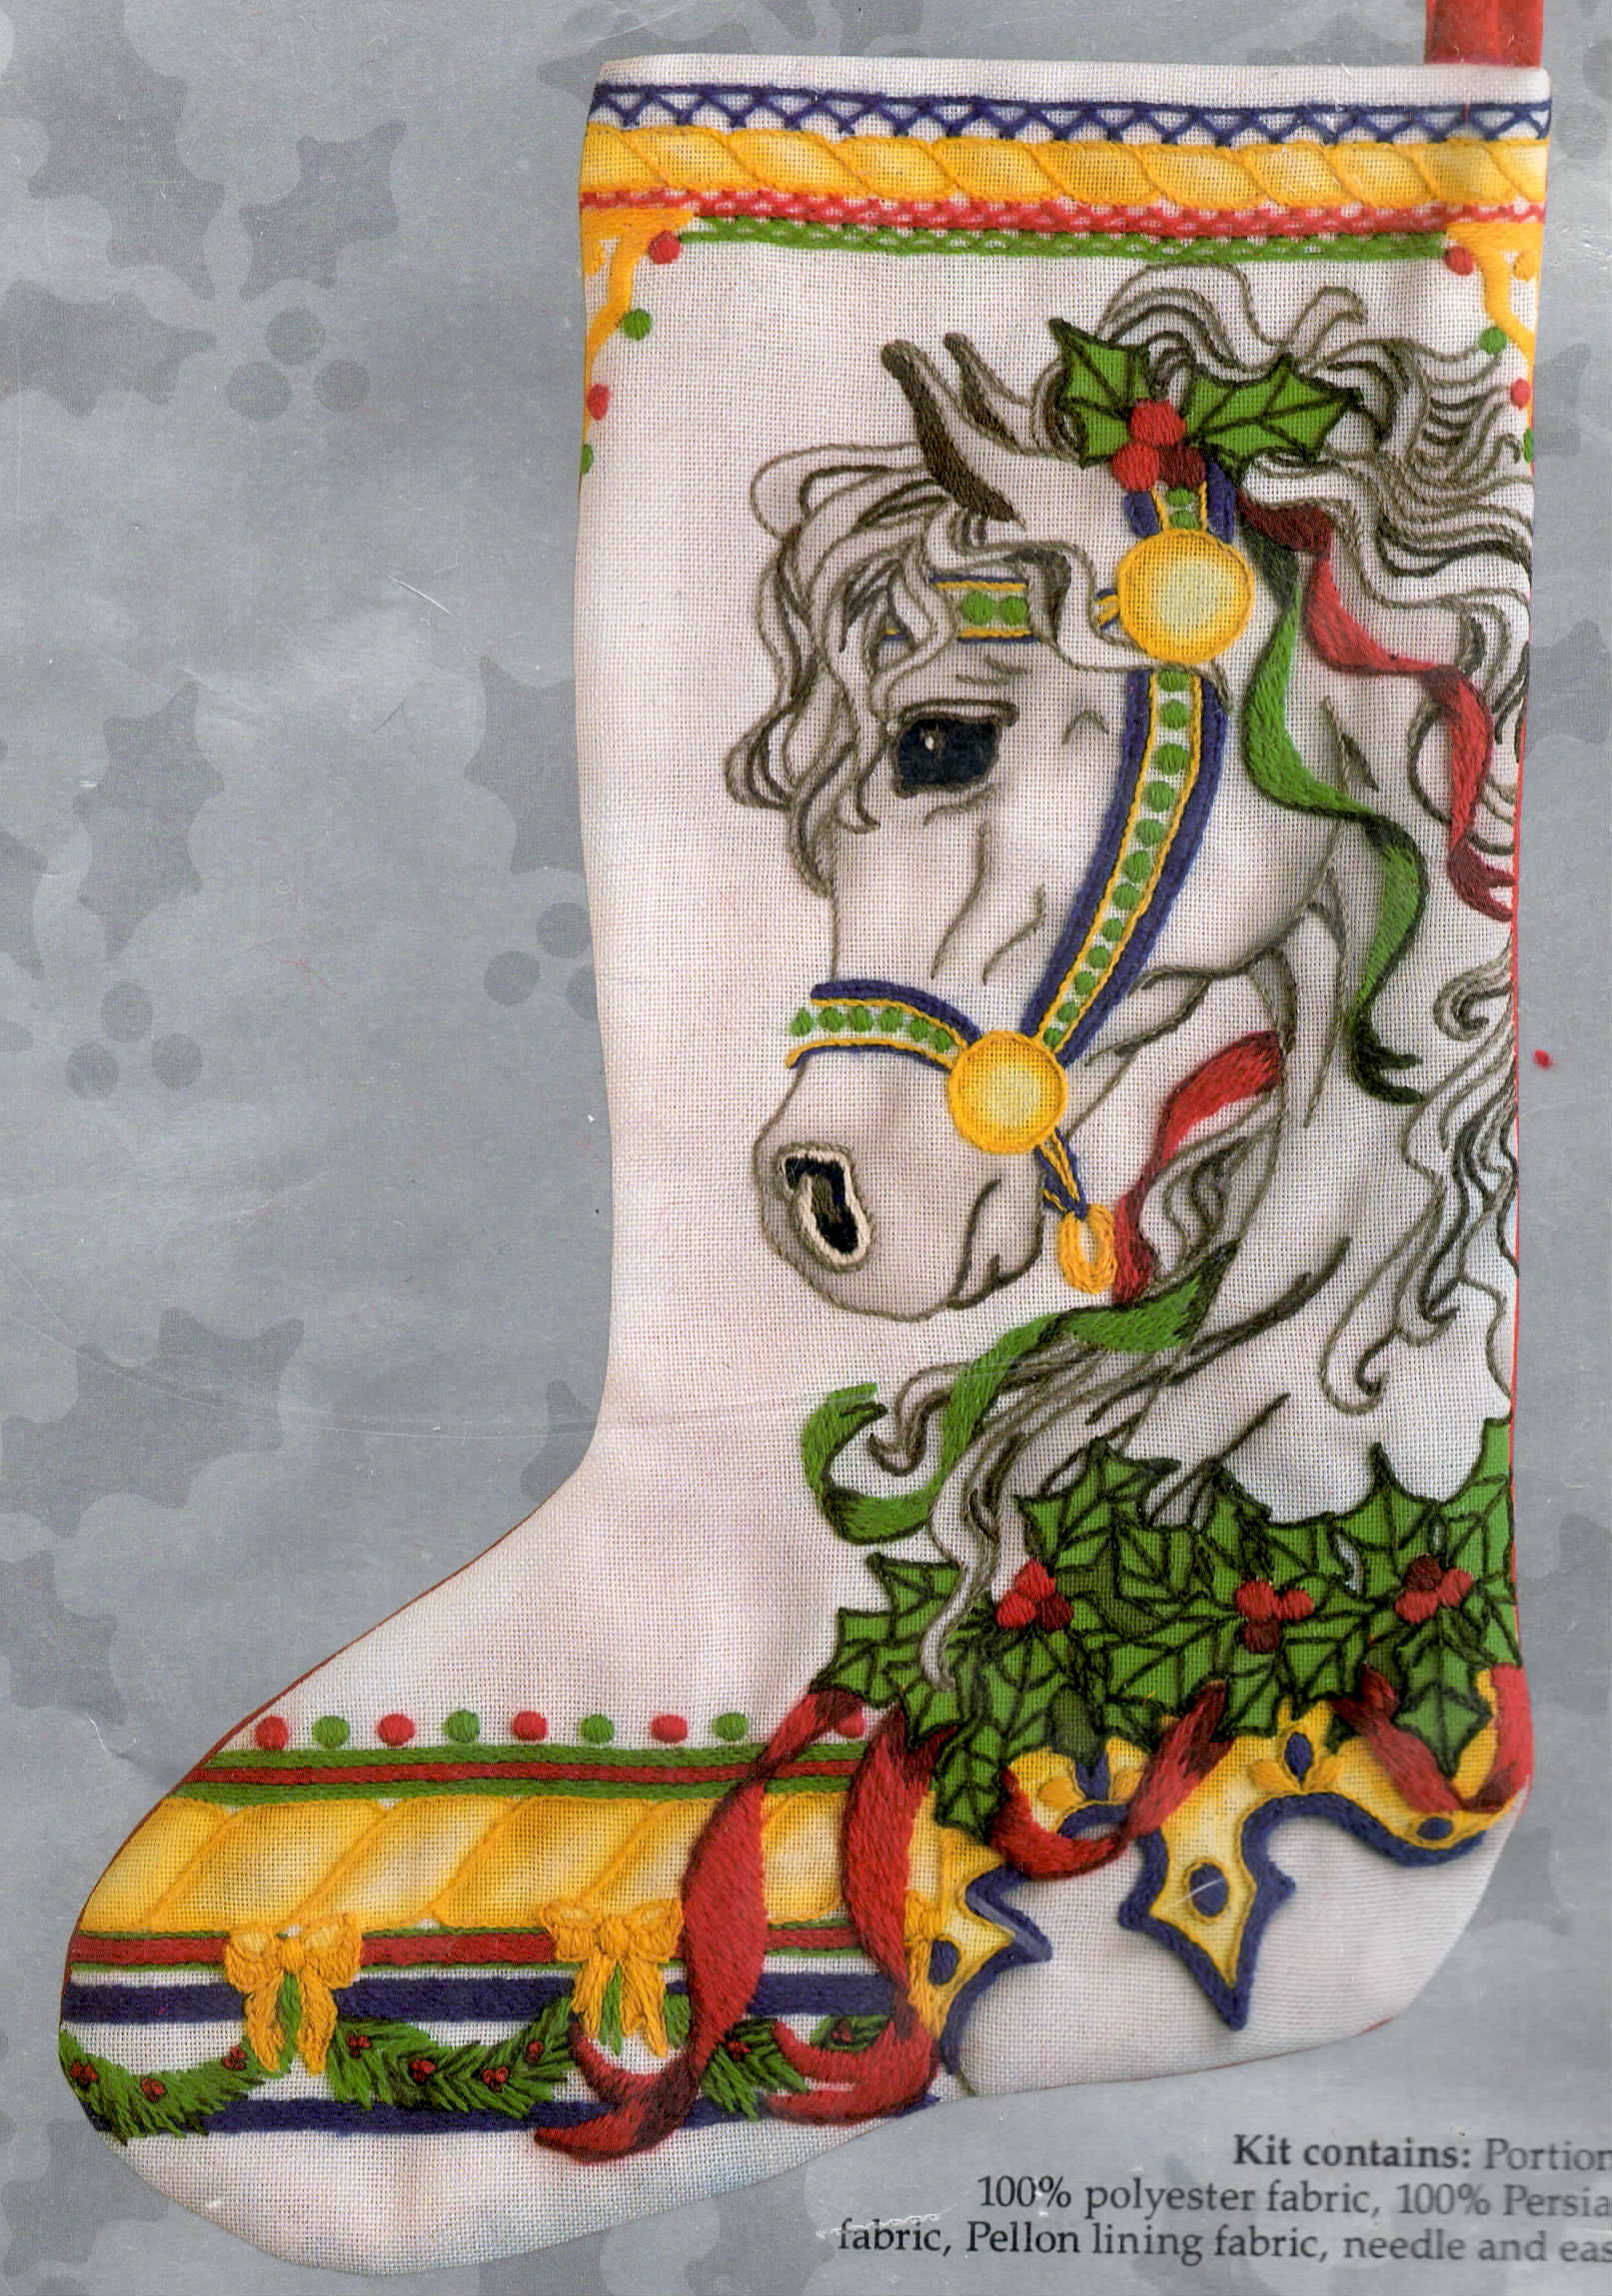 DIY Carousel Horse White Holly Christmas Christmas Crewel Stocking Kit 40241